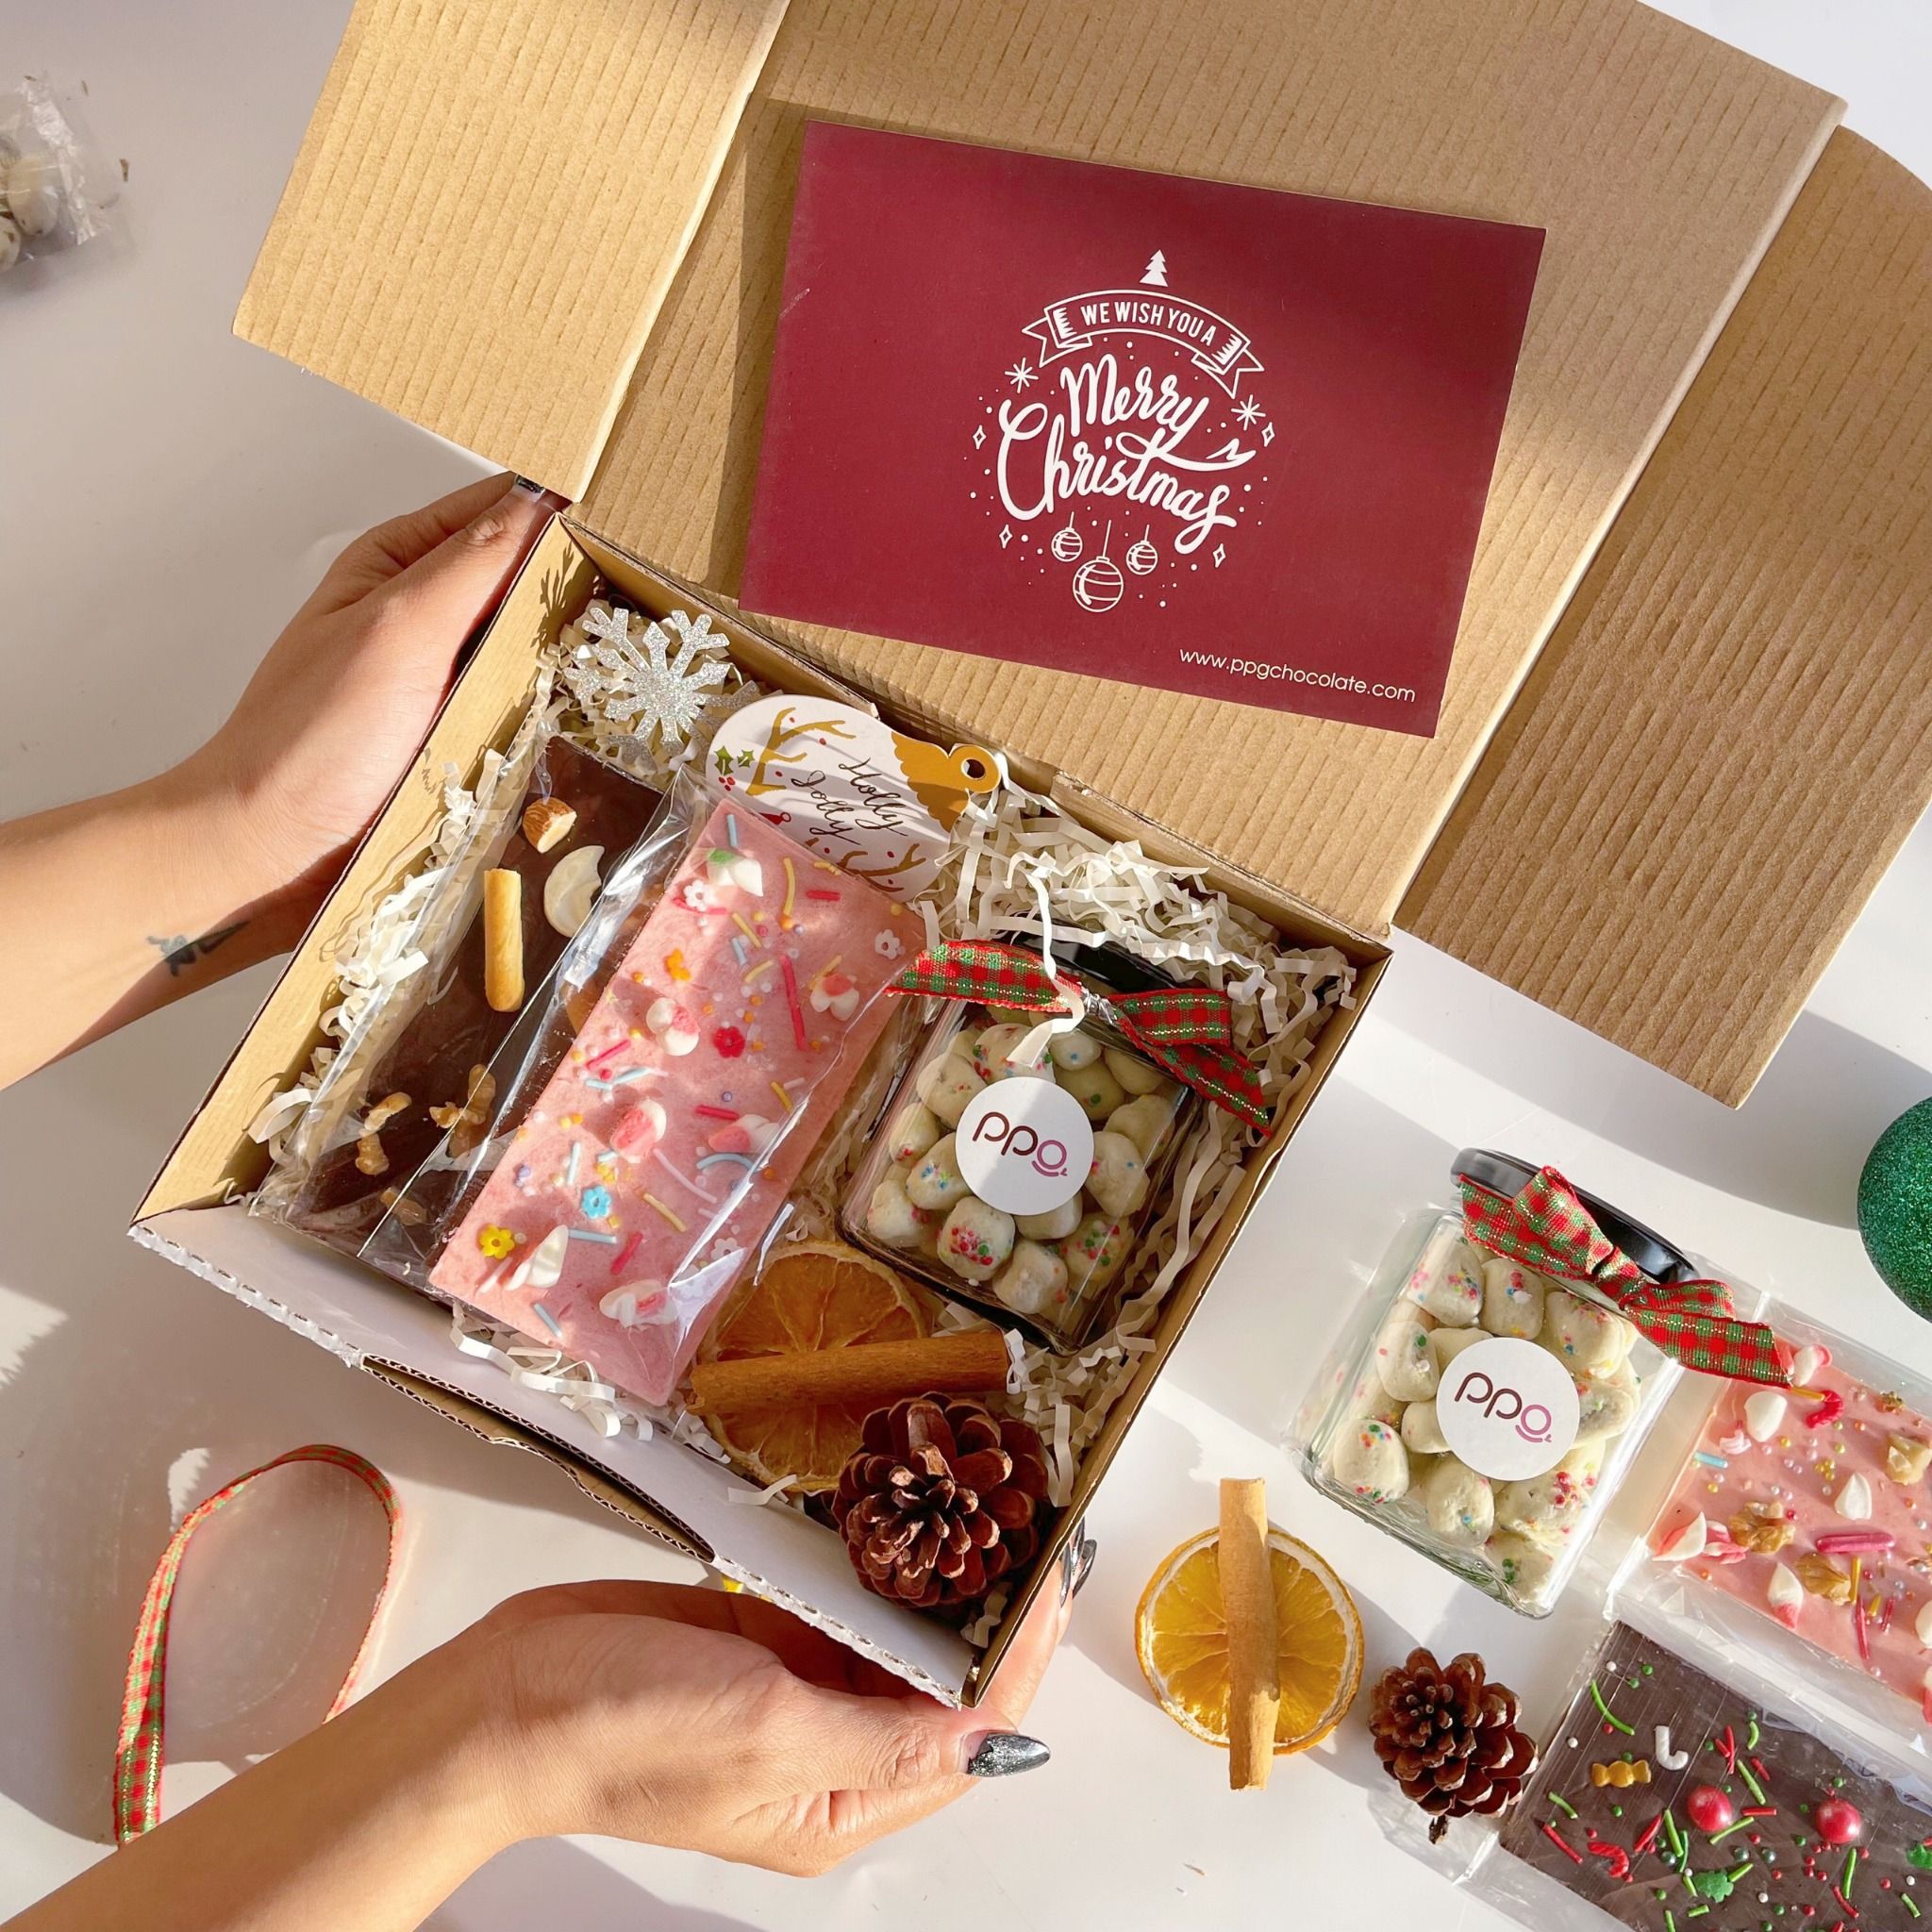  Sweet Holly Jolly Box - Set Quà Tặng Giáng Sinh by PPG CHOCOLATE 